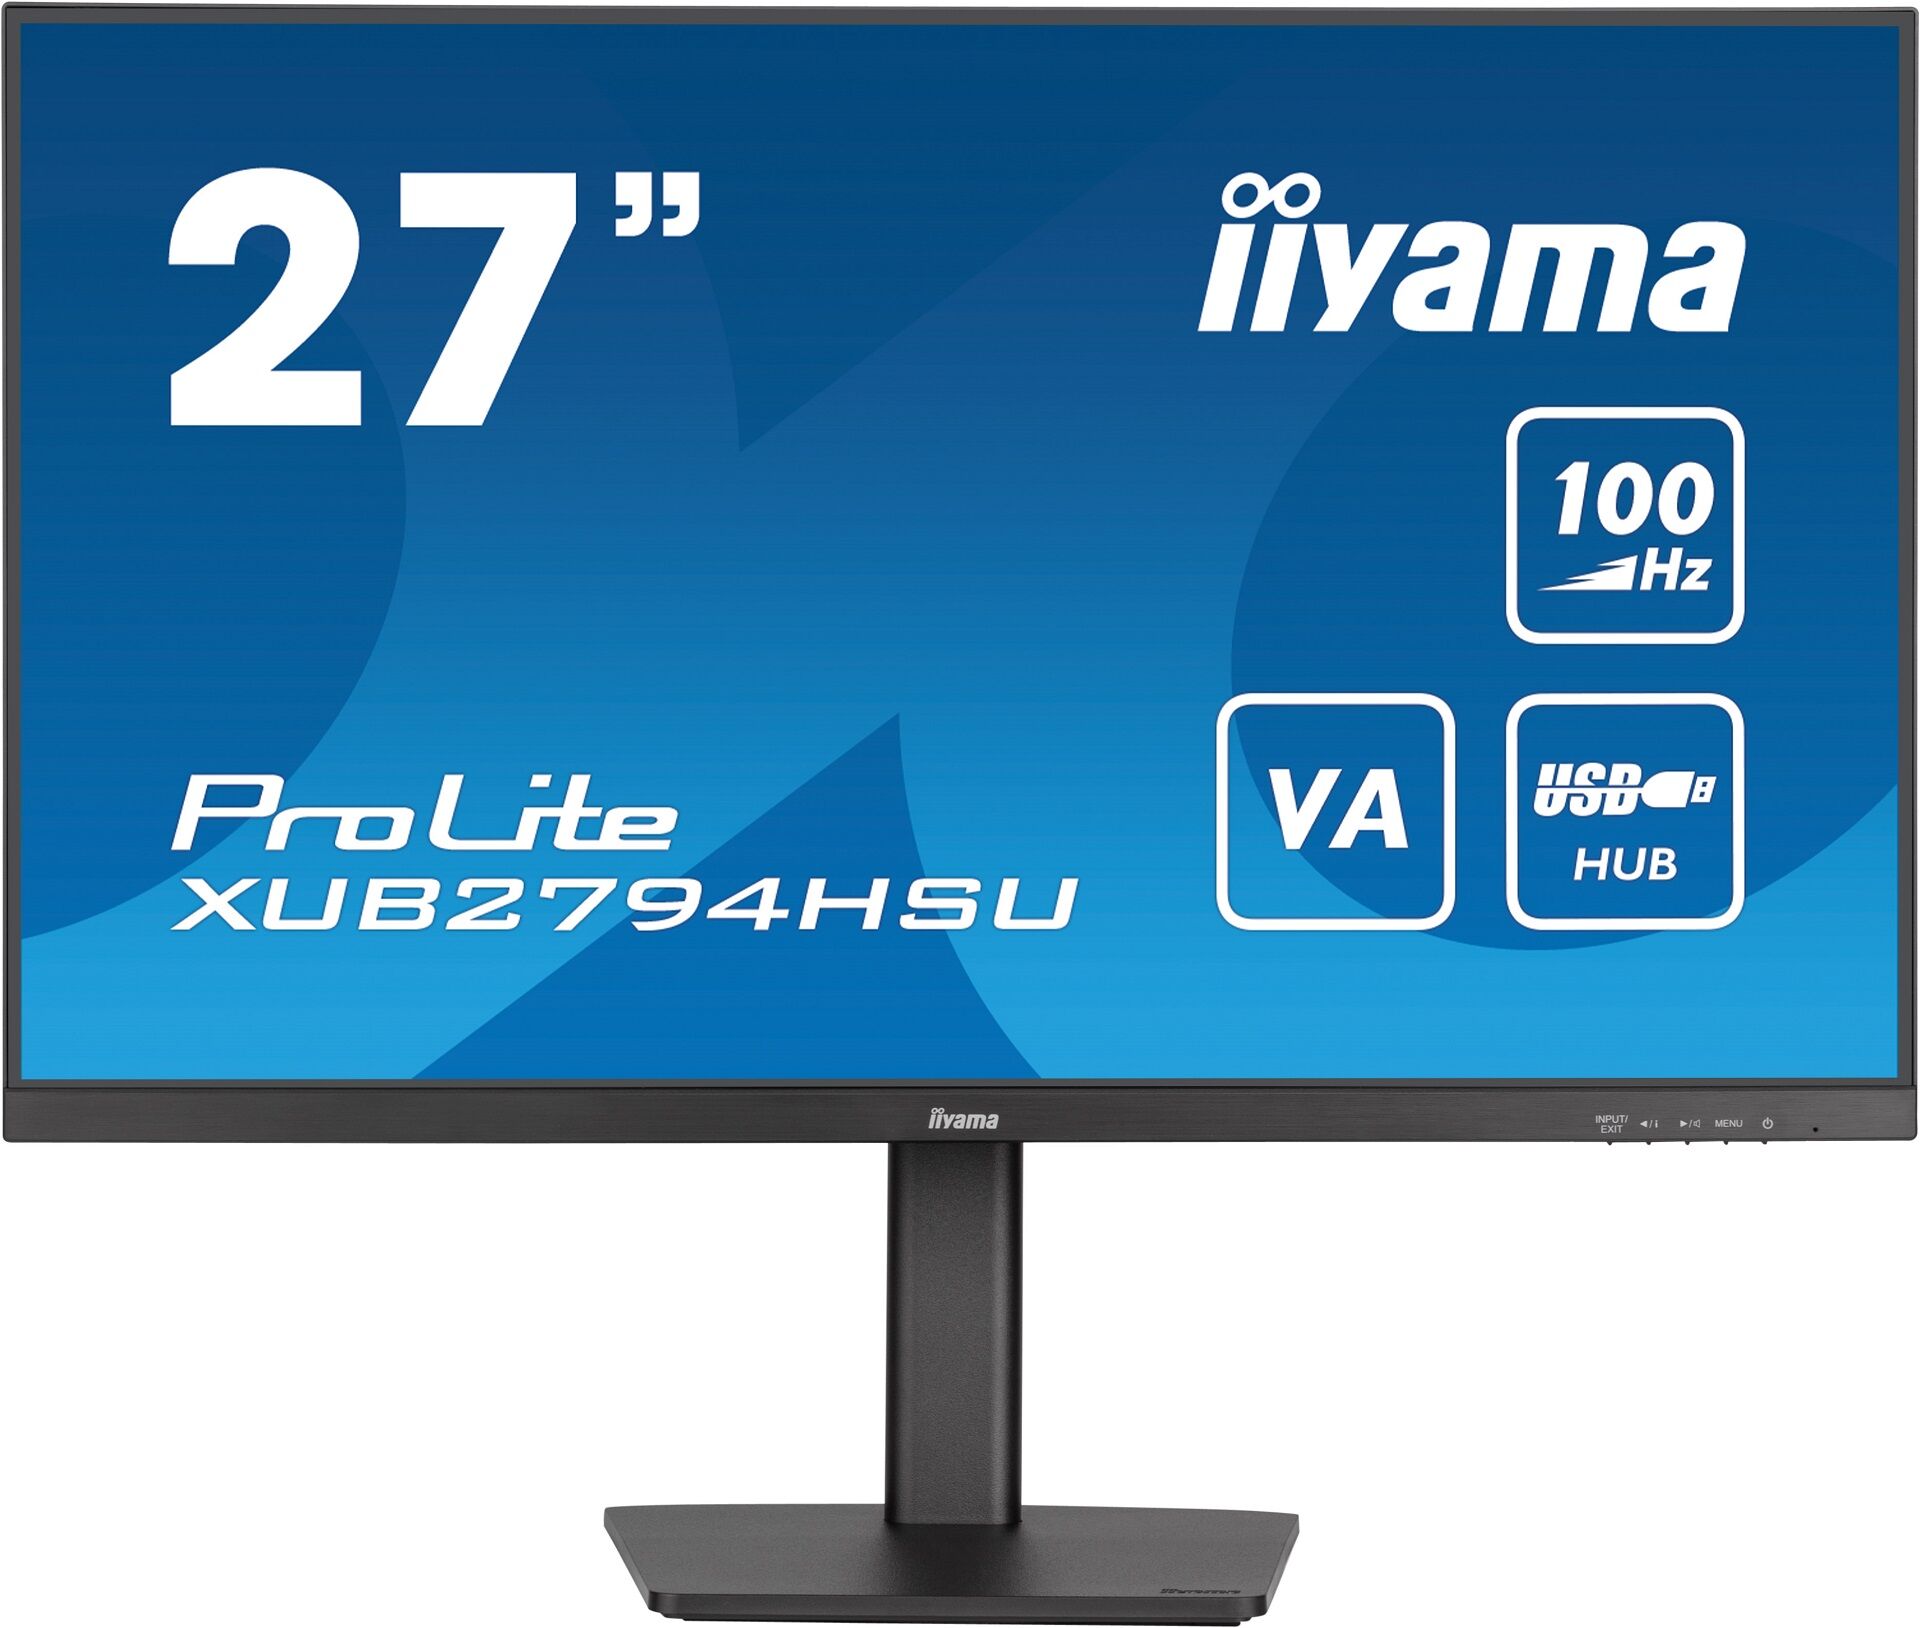 iiyama prezentuje nowe monitory ProLite 2